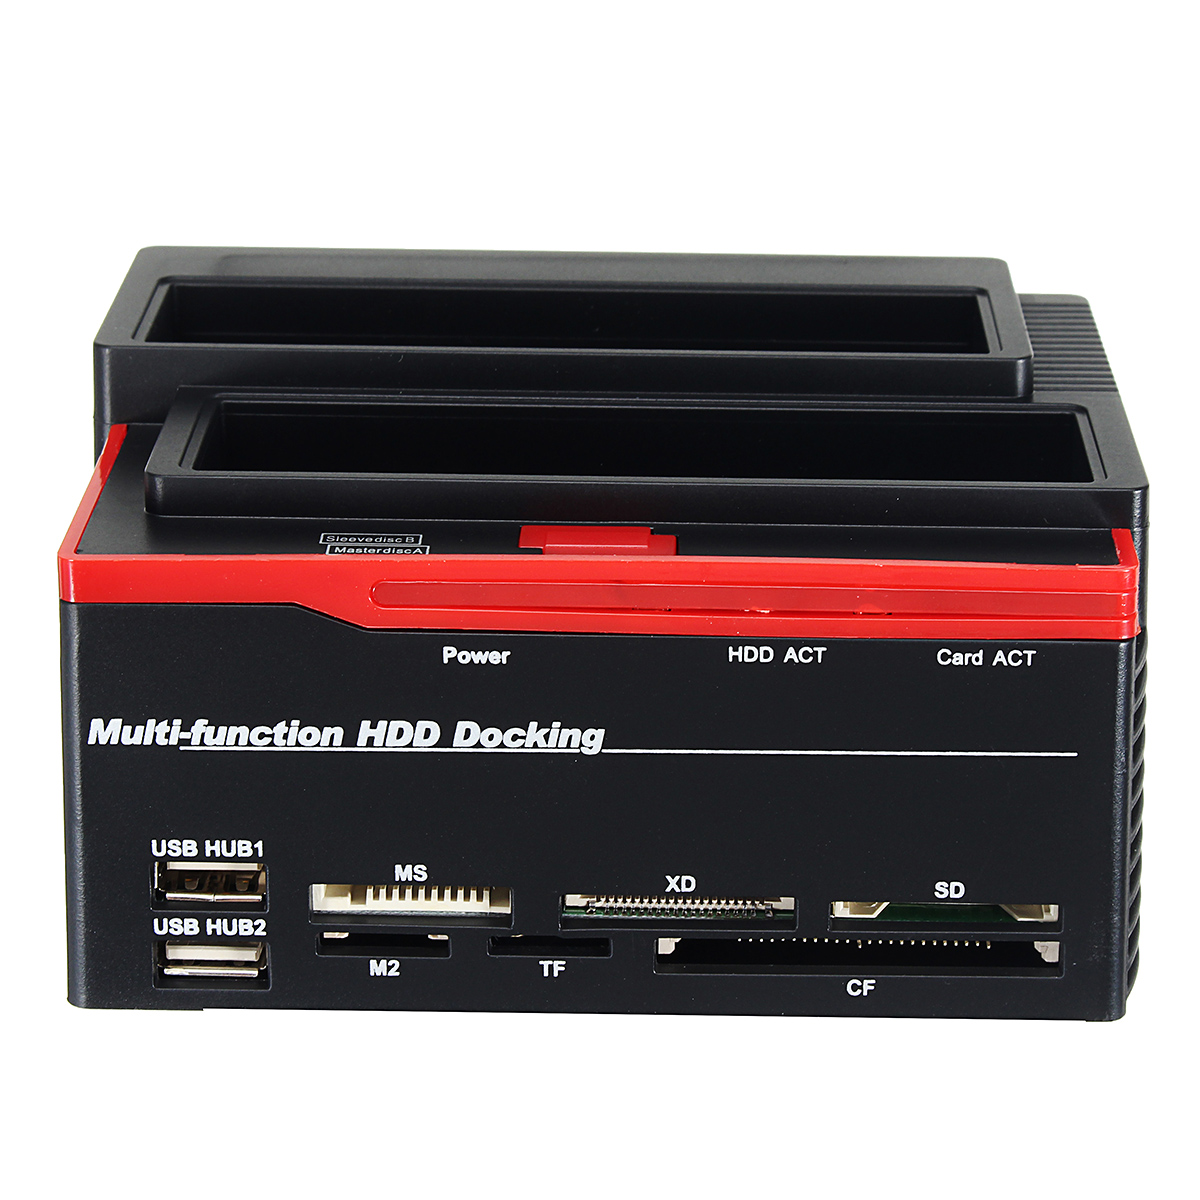 

2.5/3.5" SATA IDE HDD Docking Station Clone Backup Hard Drive Enclosure USB2.0 HUB Card Reader EU